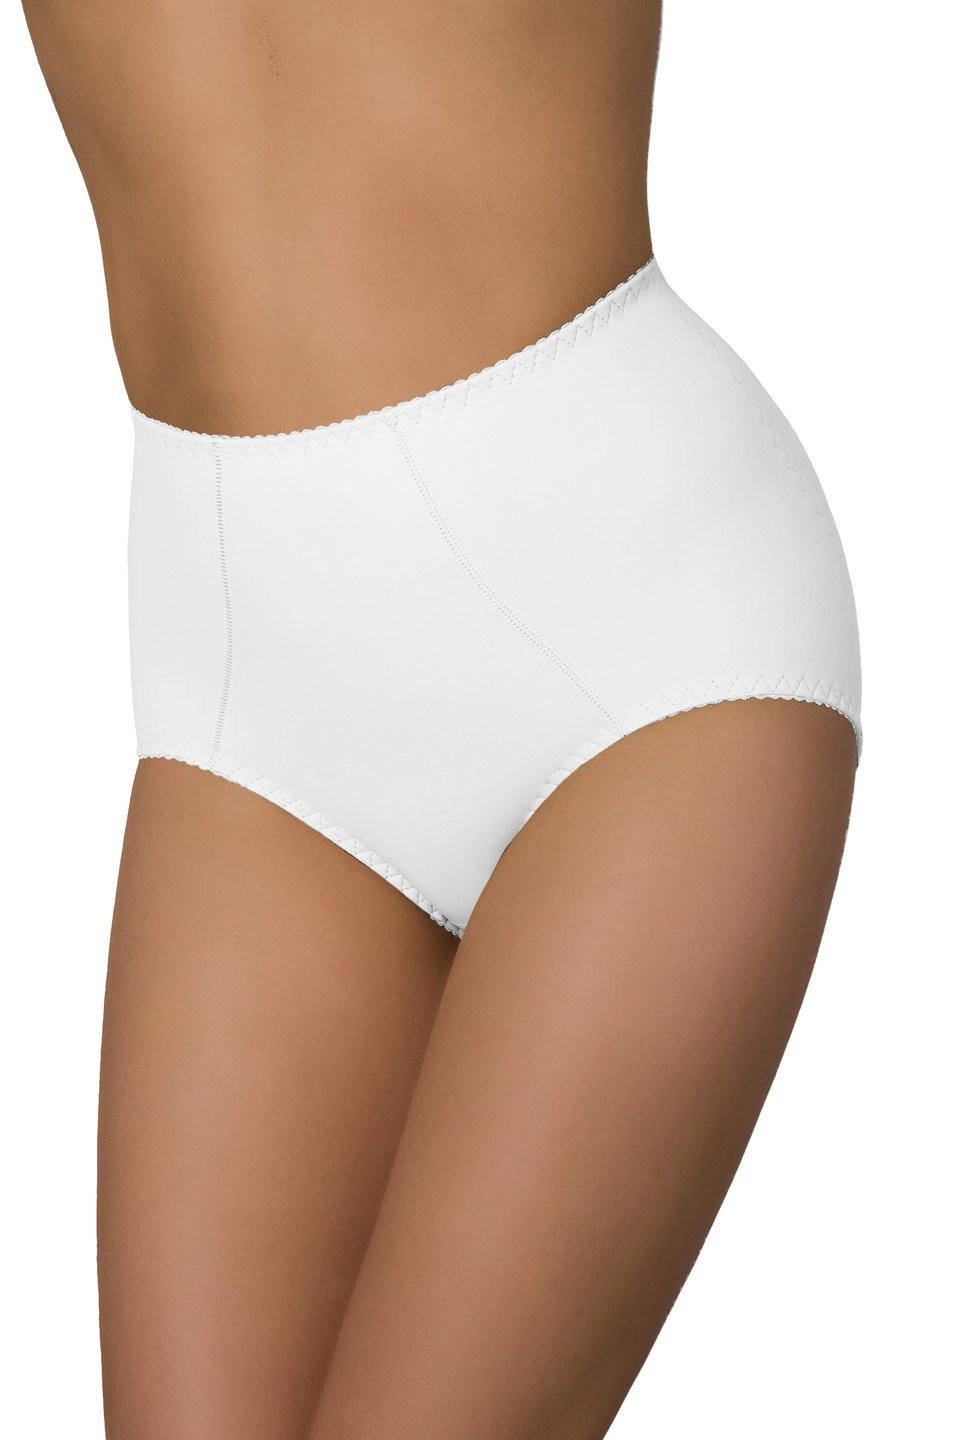 Bílé kalhotky Verona - Eldar XL